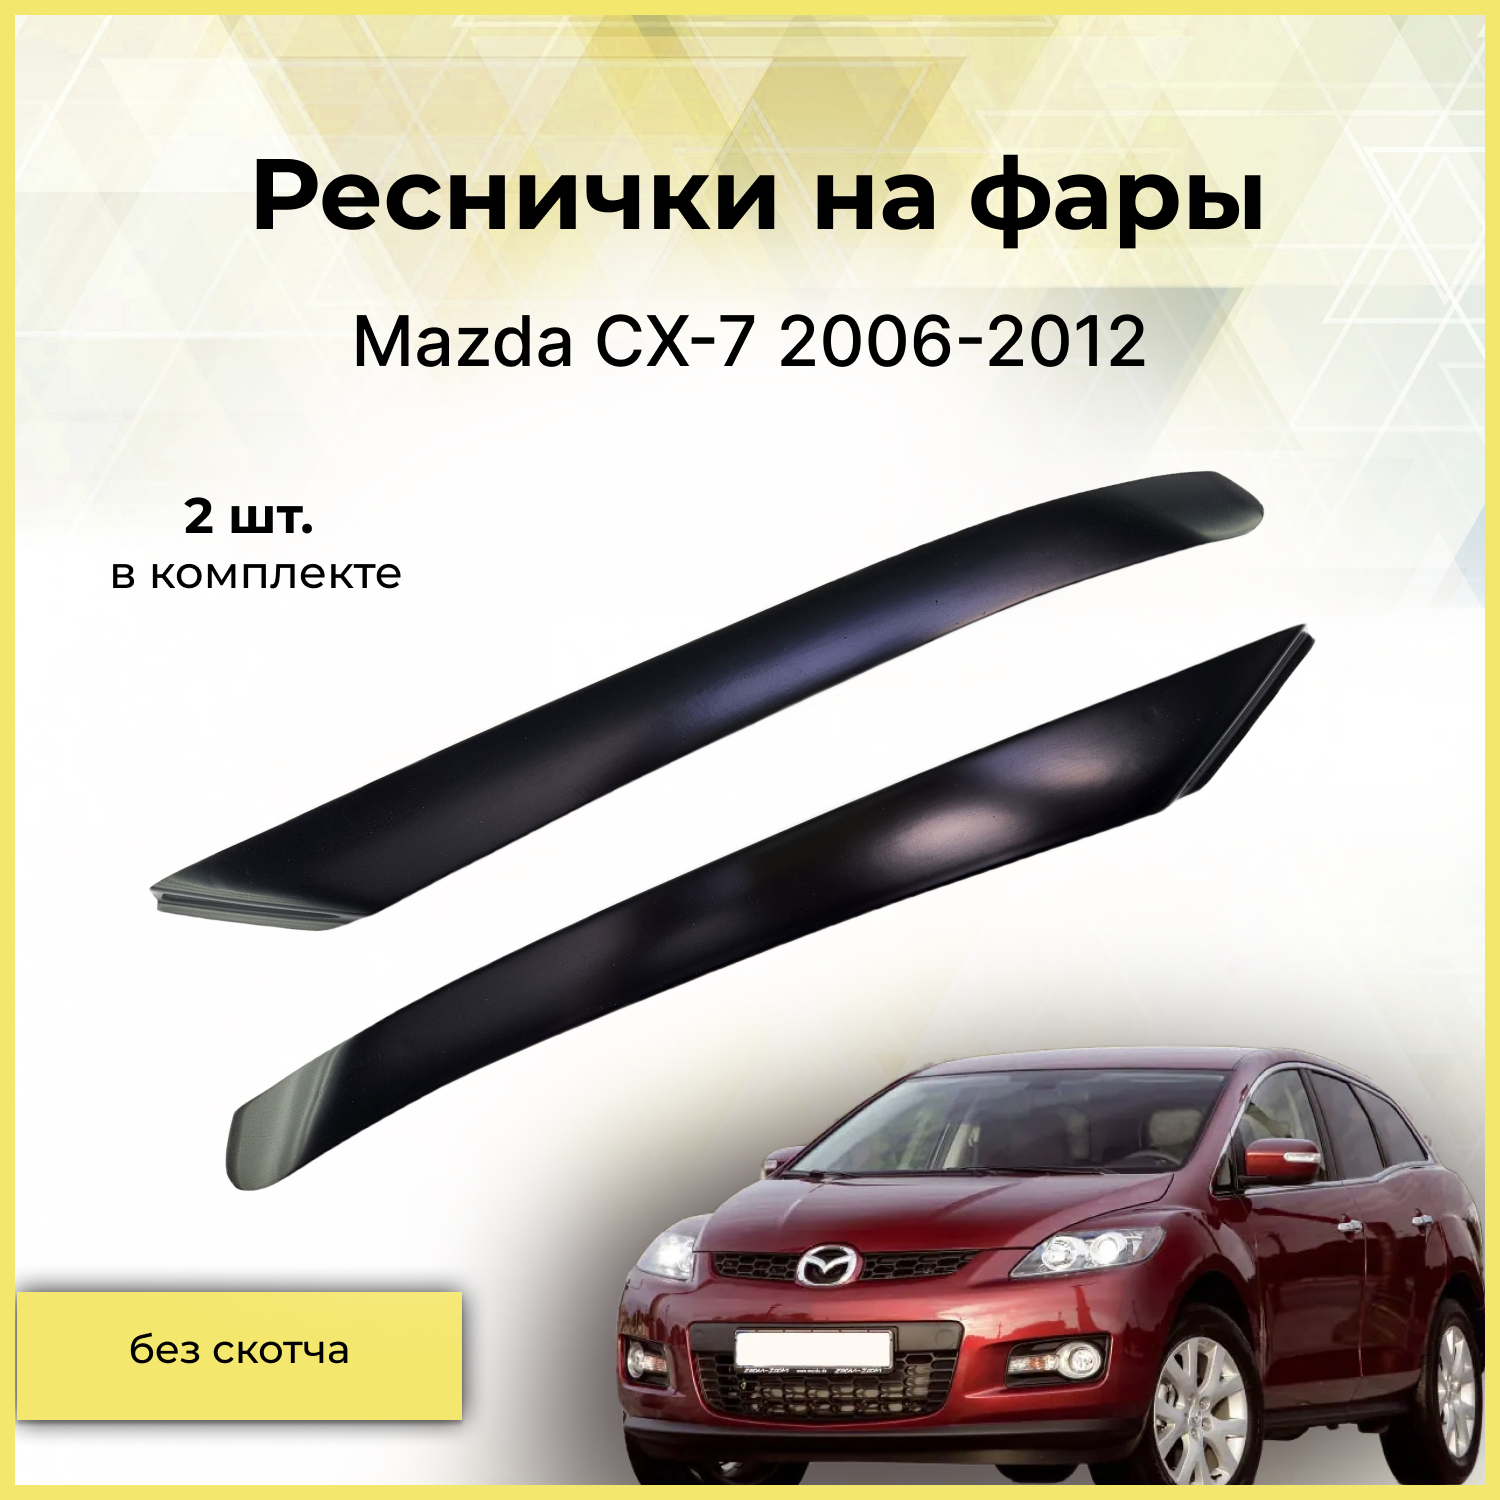 Реснички на фары / Накладки на передние фары для Mazda CX-7 (Мазда СХ-7) 2006-2012